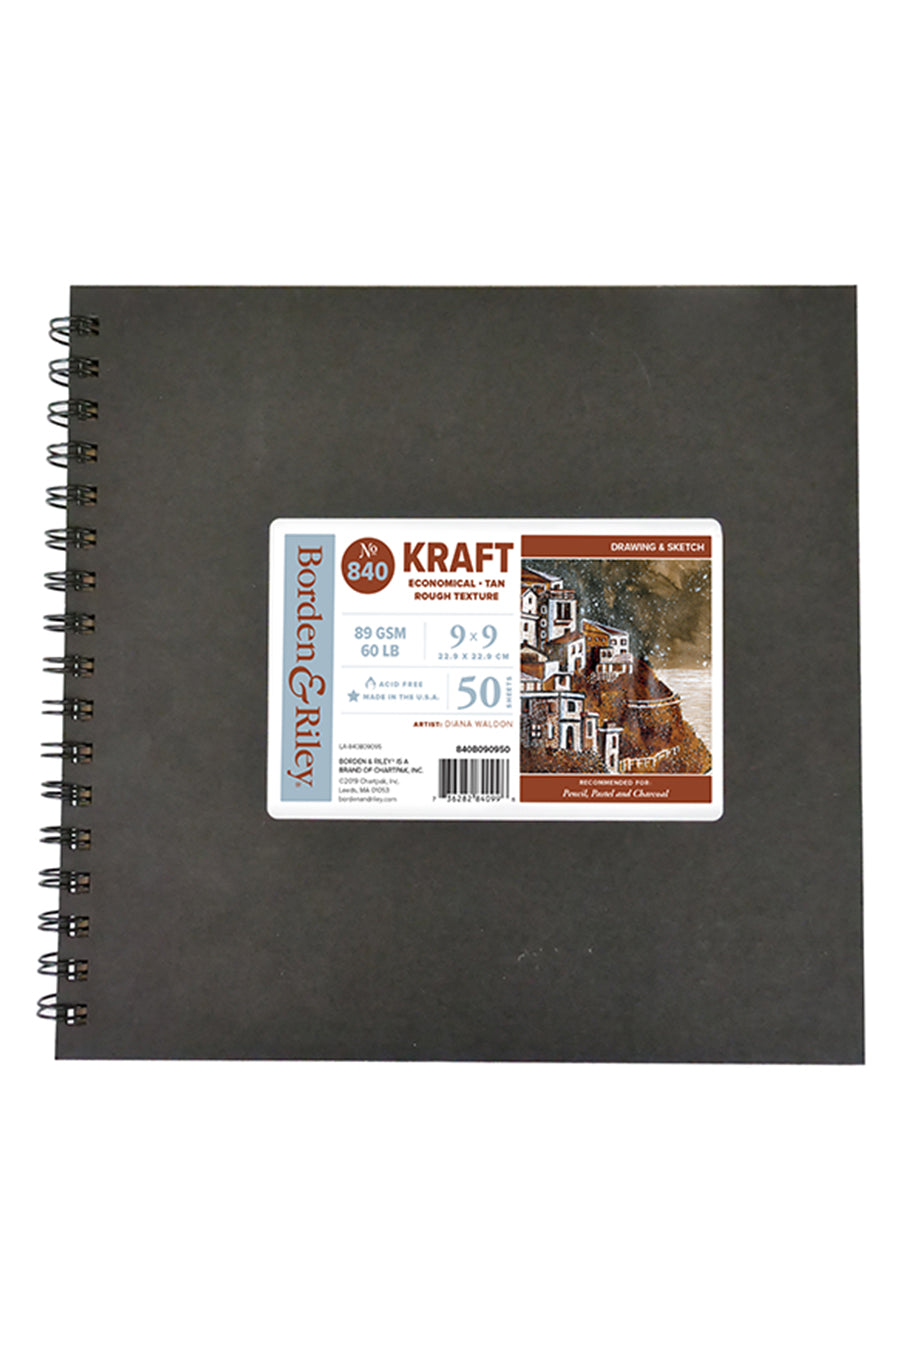 840 Kraft 9x9 Hardcover Book